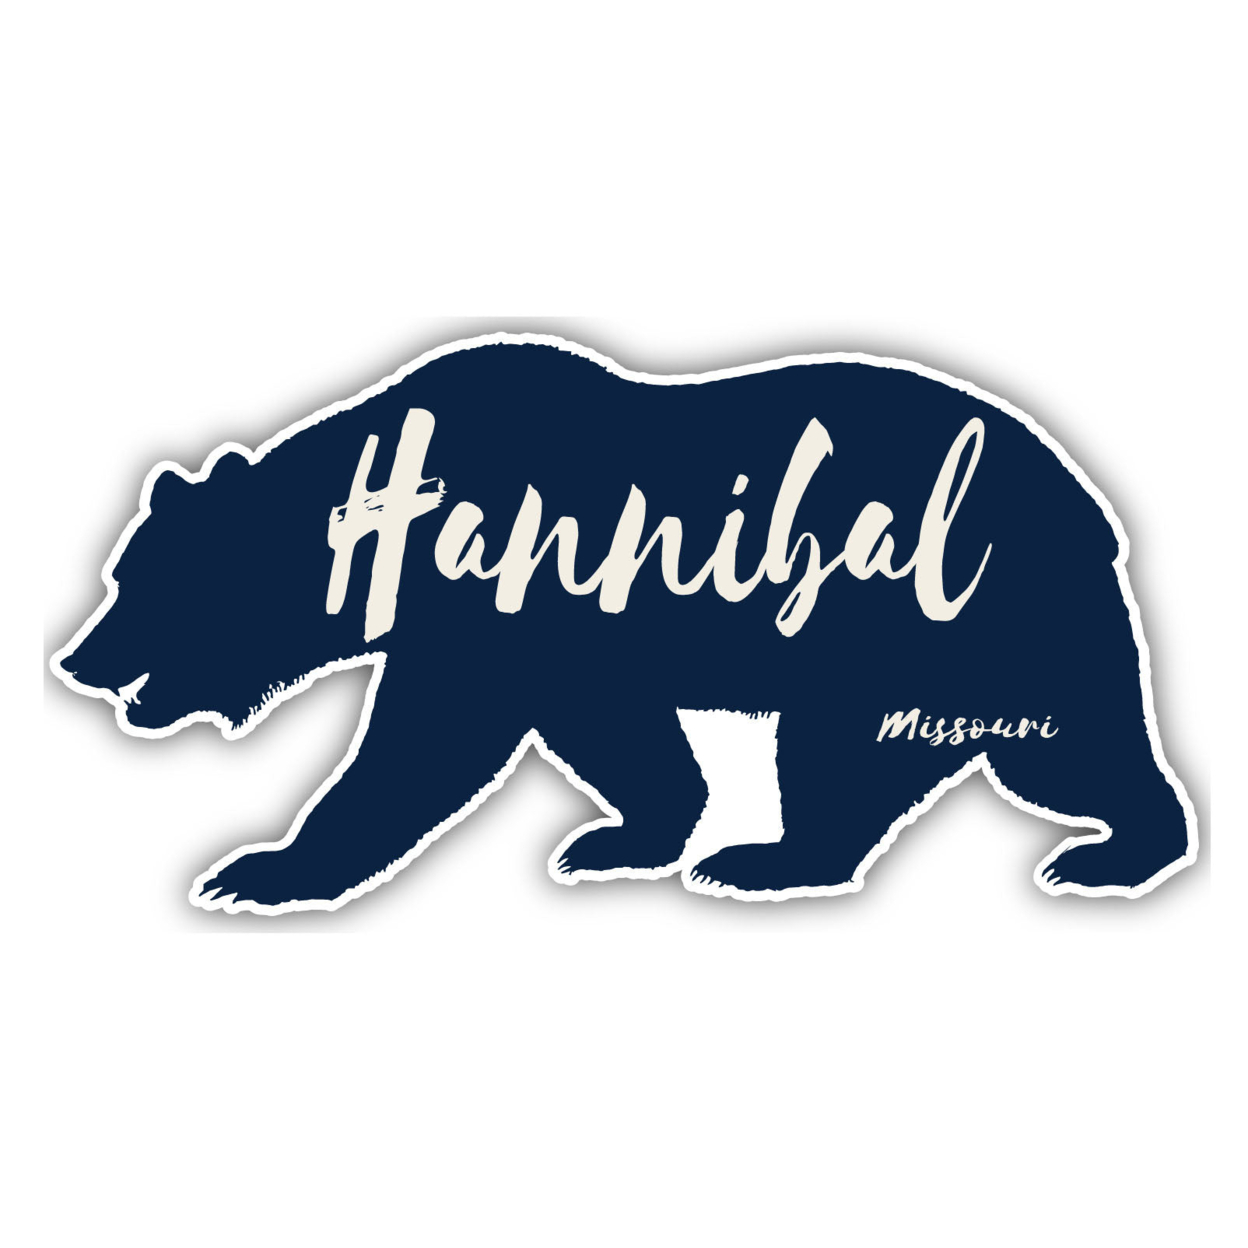 Hannibal Missouri Souvenir Decorative Stickers (Choose Theme And Size) - 4-Pack, 2-Inch, Bear